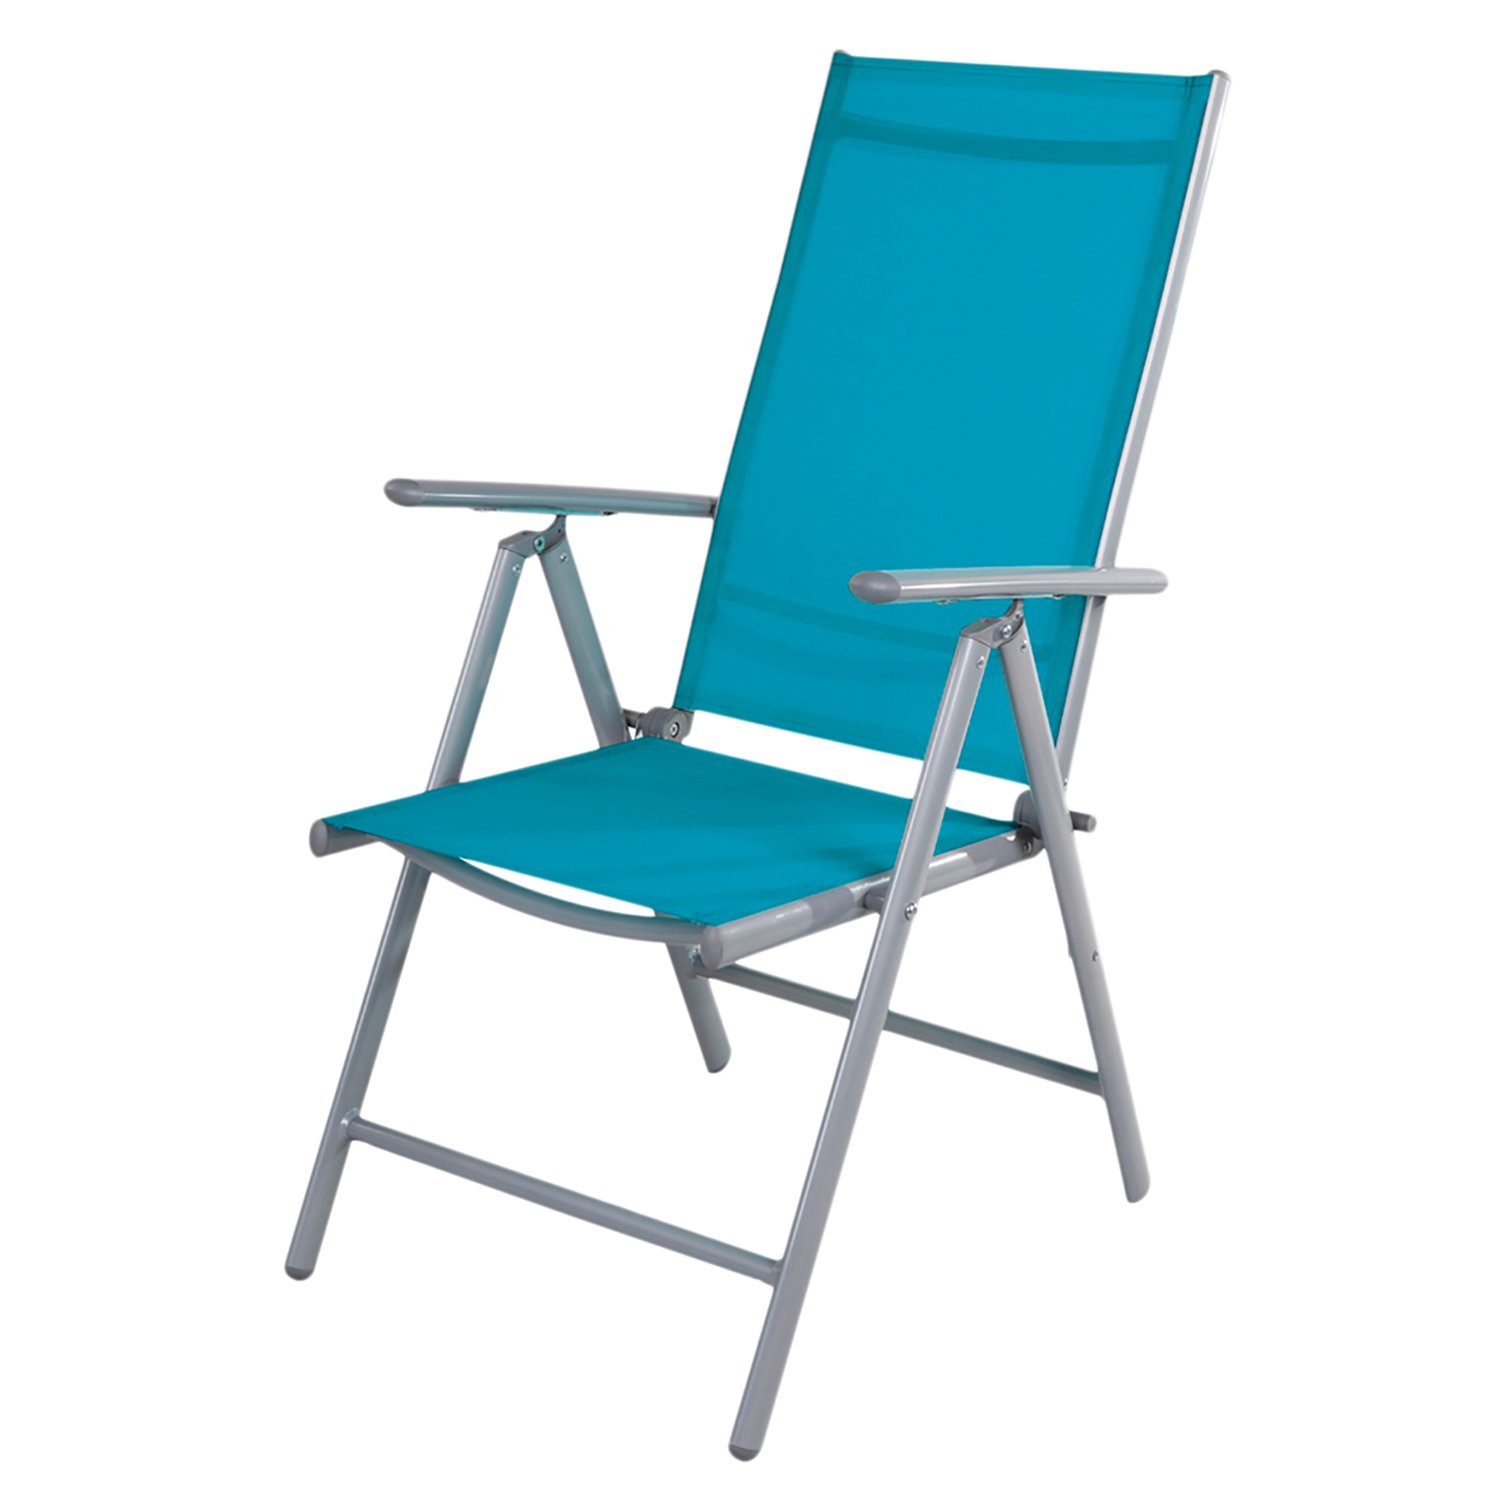 INDA-Exclusiv Armlehnstuhl Gartenstuhl Klappstuhl Aluminium - Textilen Silbergrau/Petrol 7- Positionen | Stühle